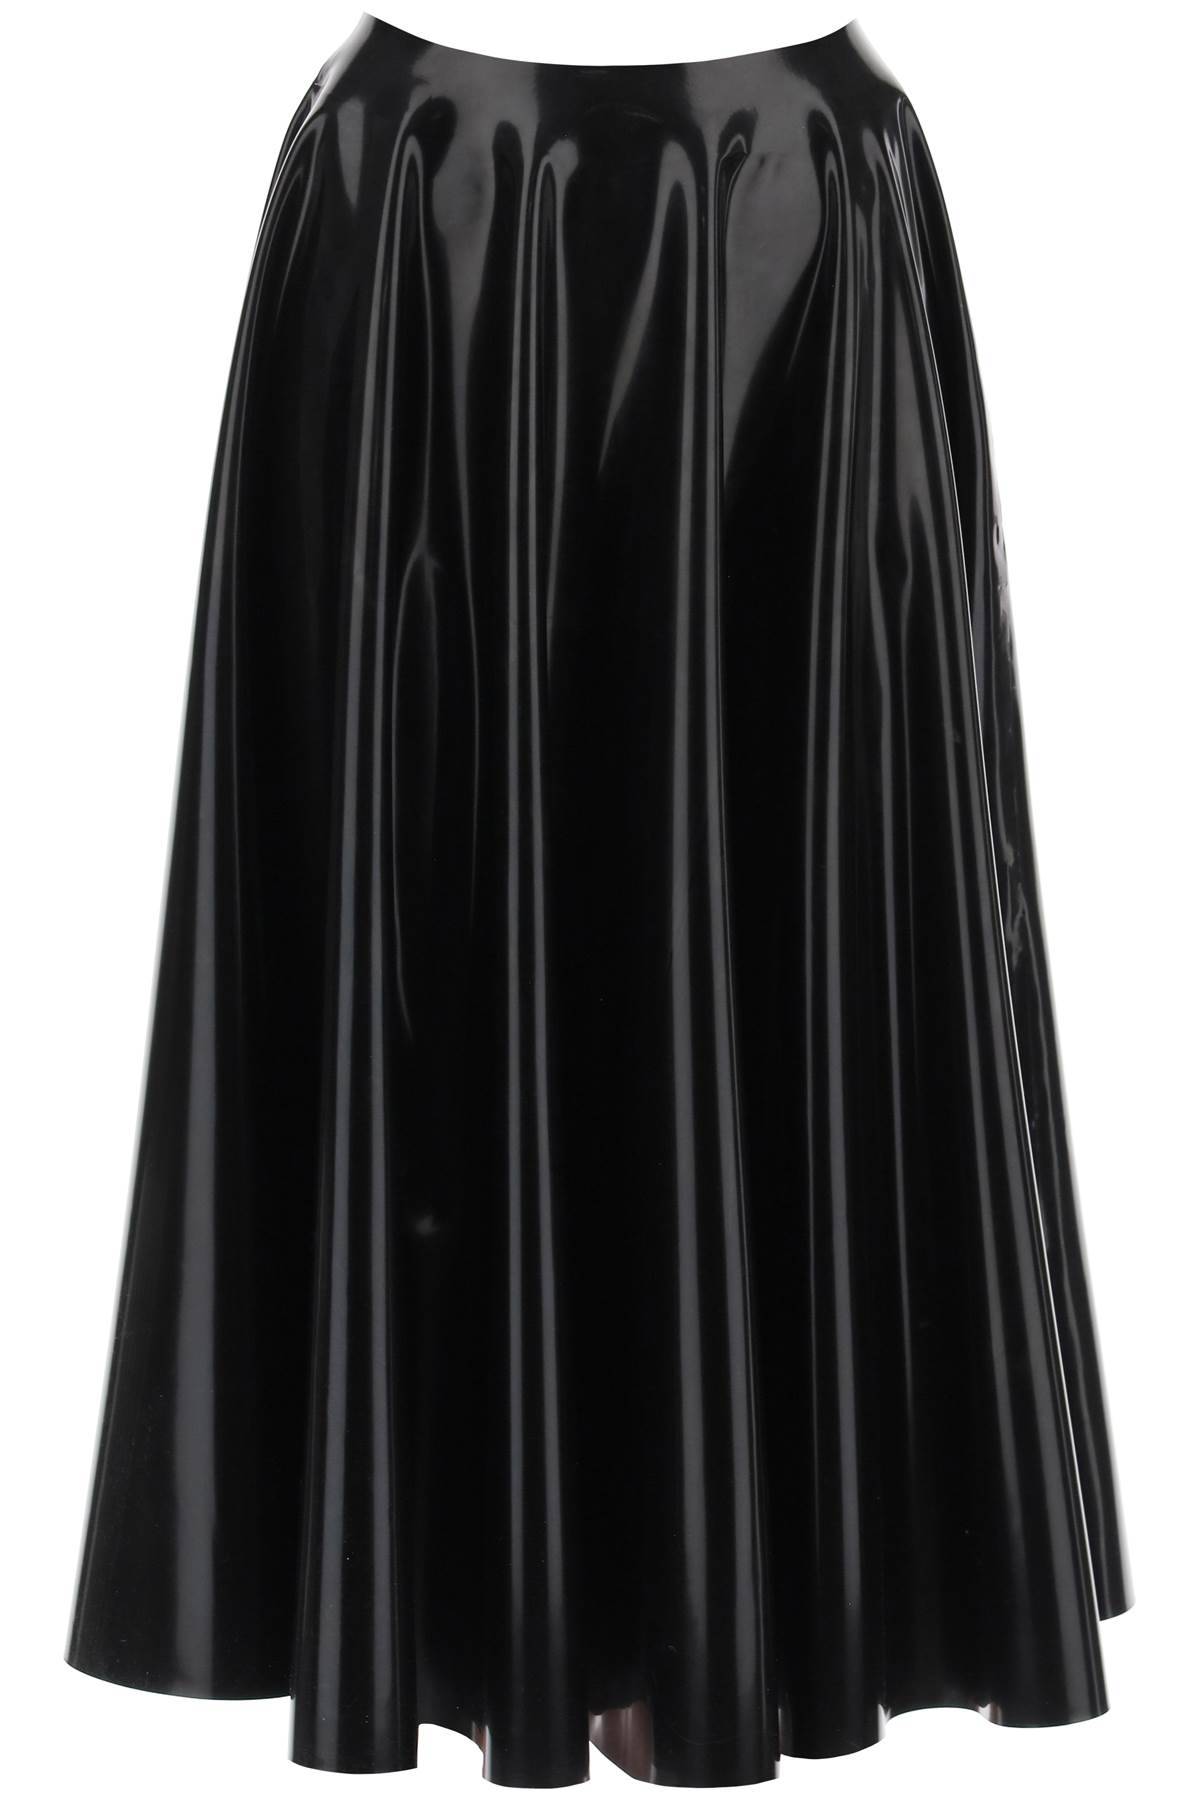 Alaïa ALAIA circular skirt in latex